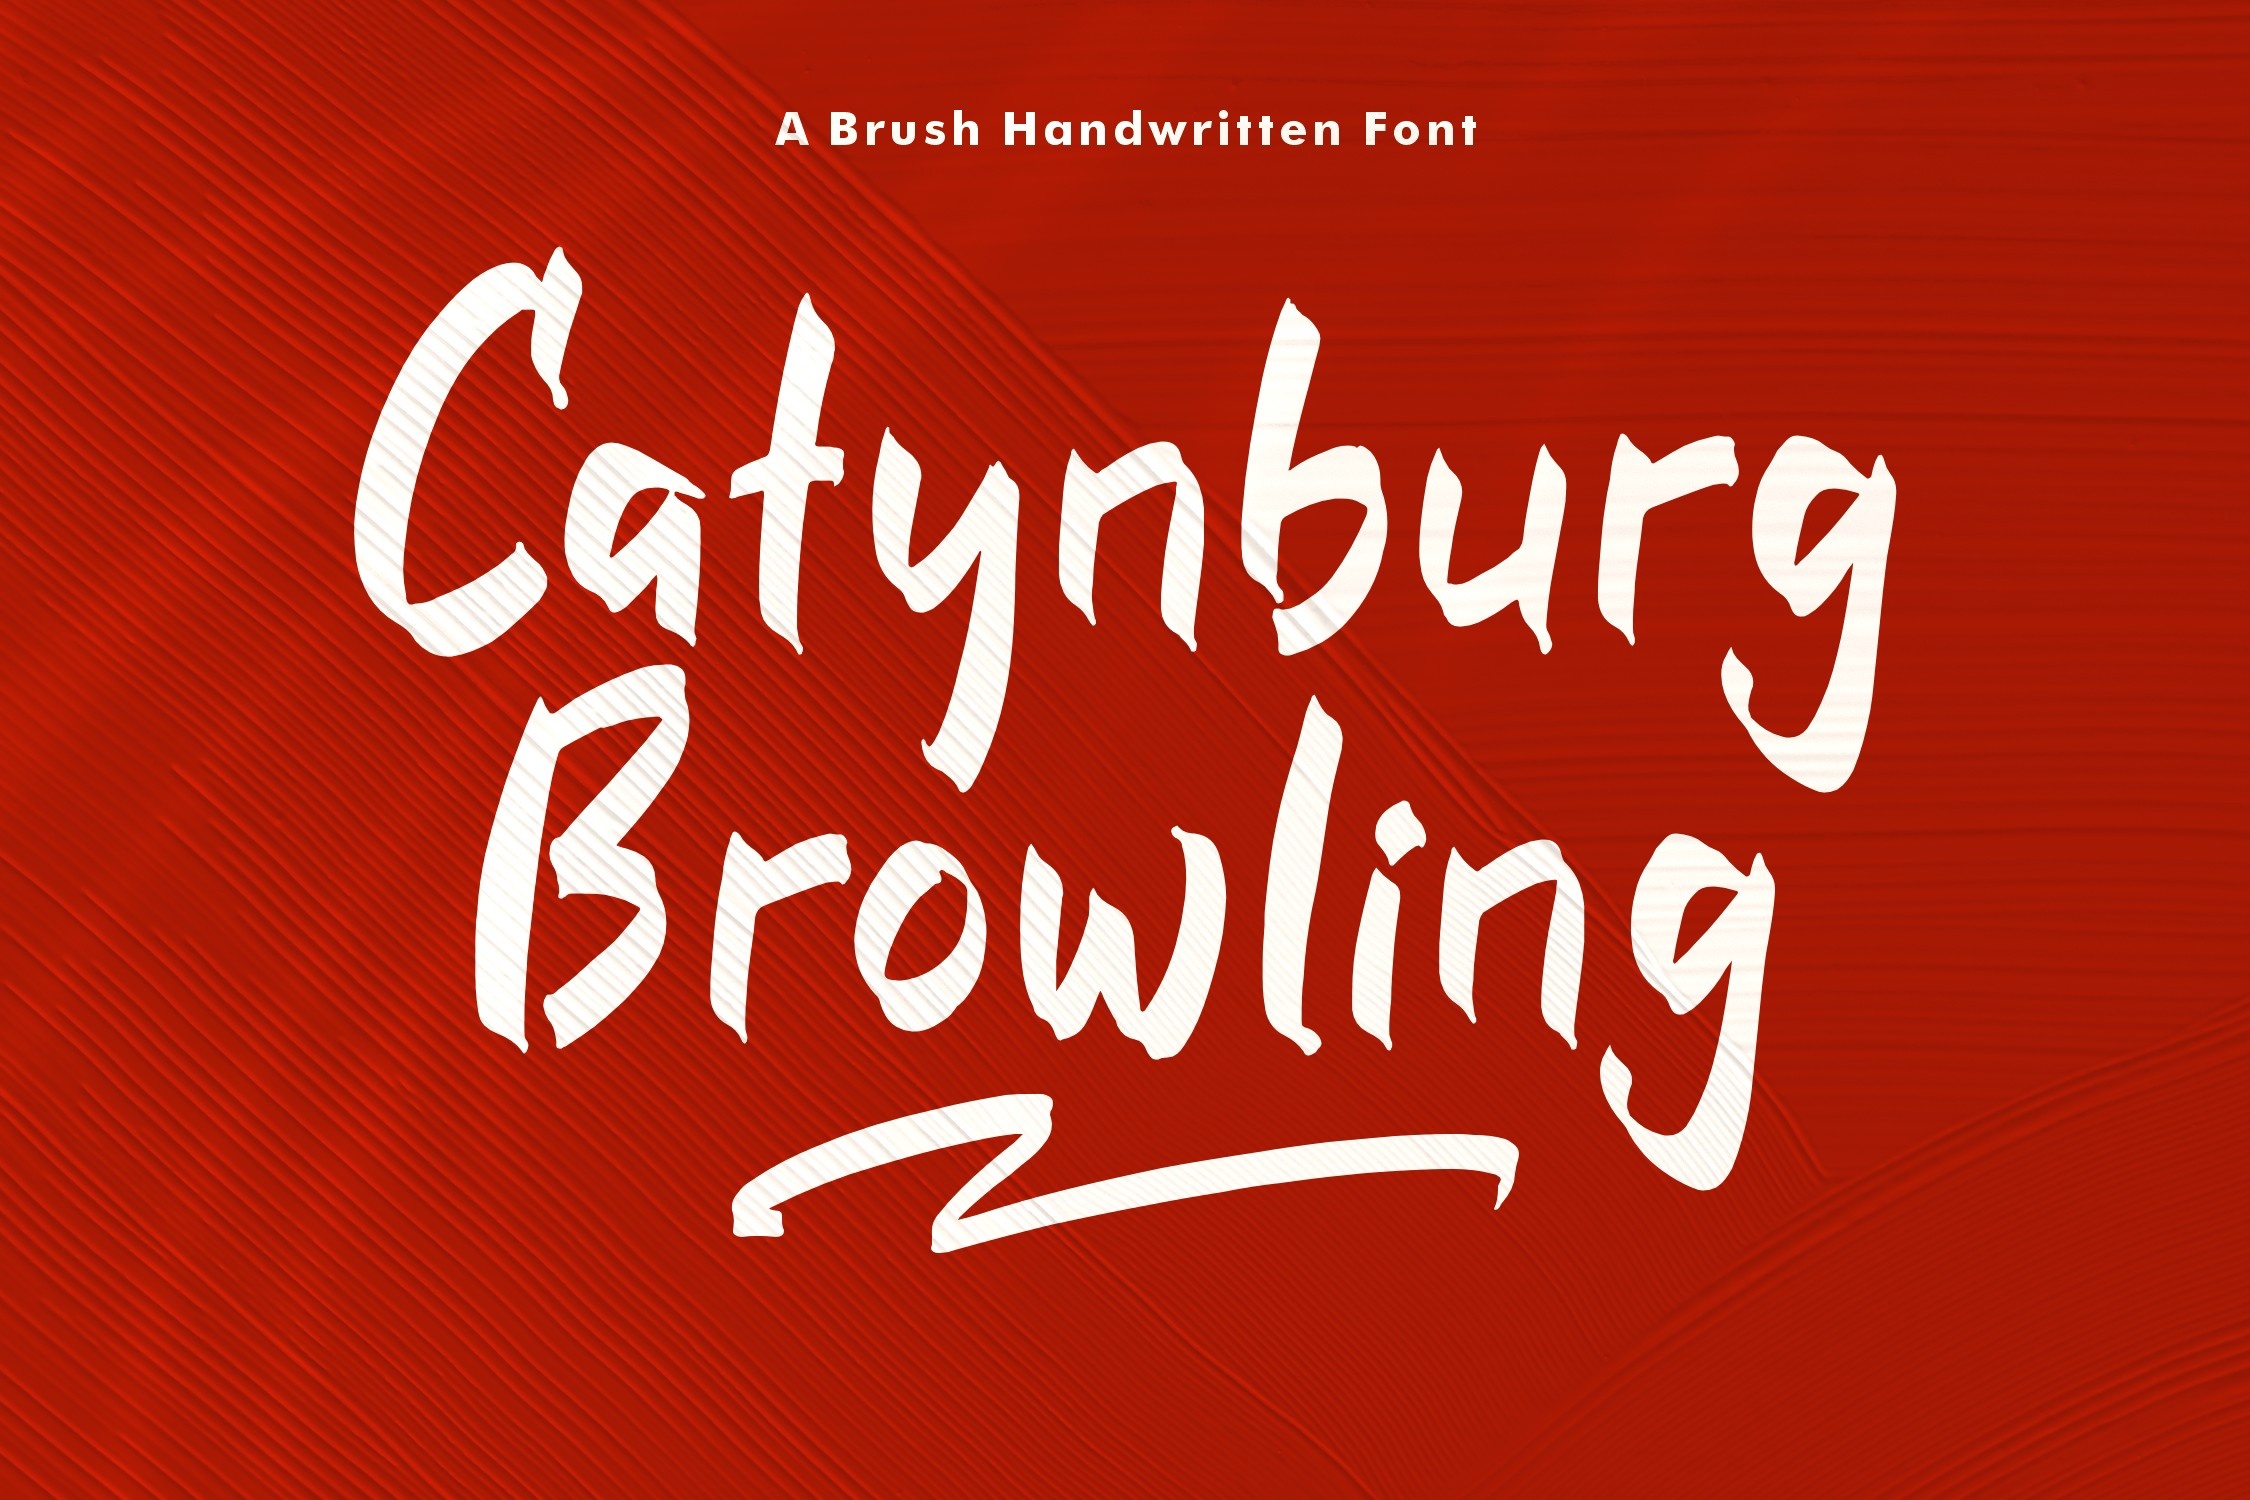 Font Catynburg Browling